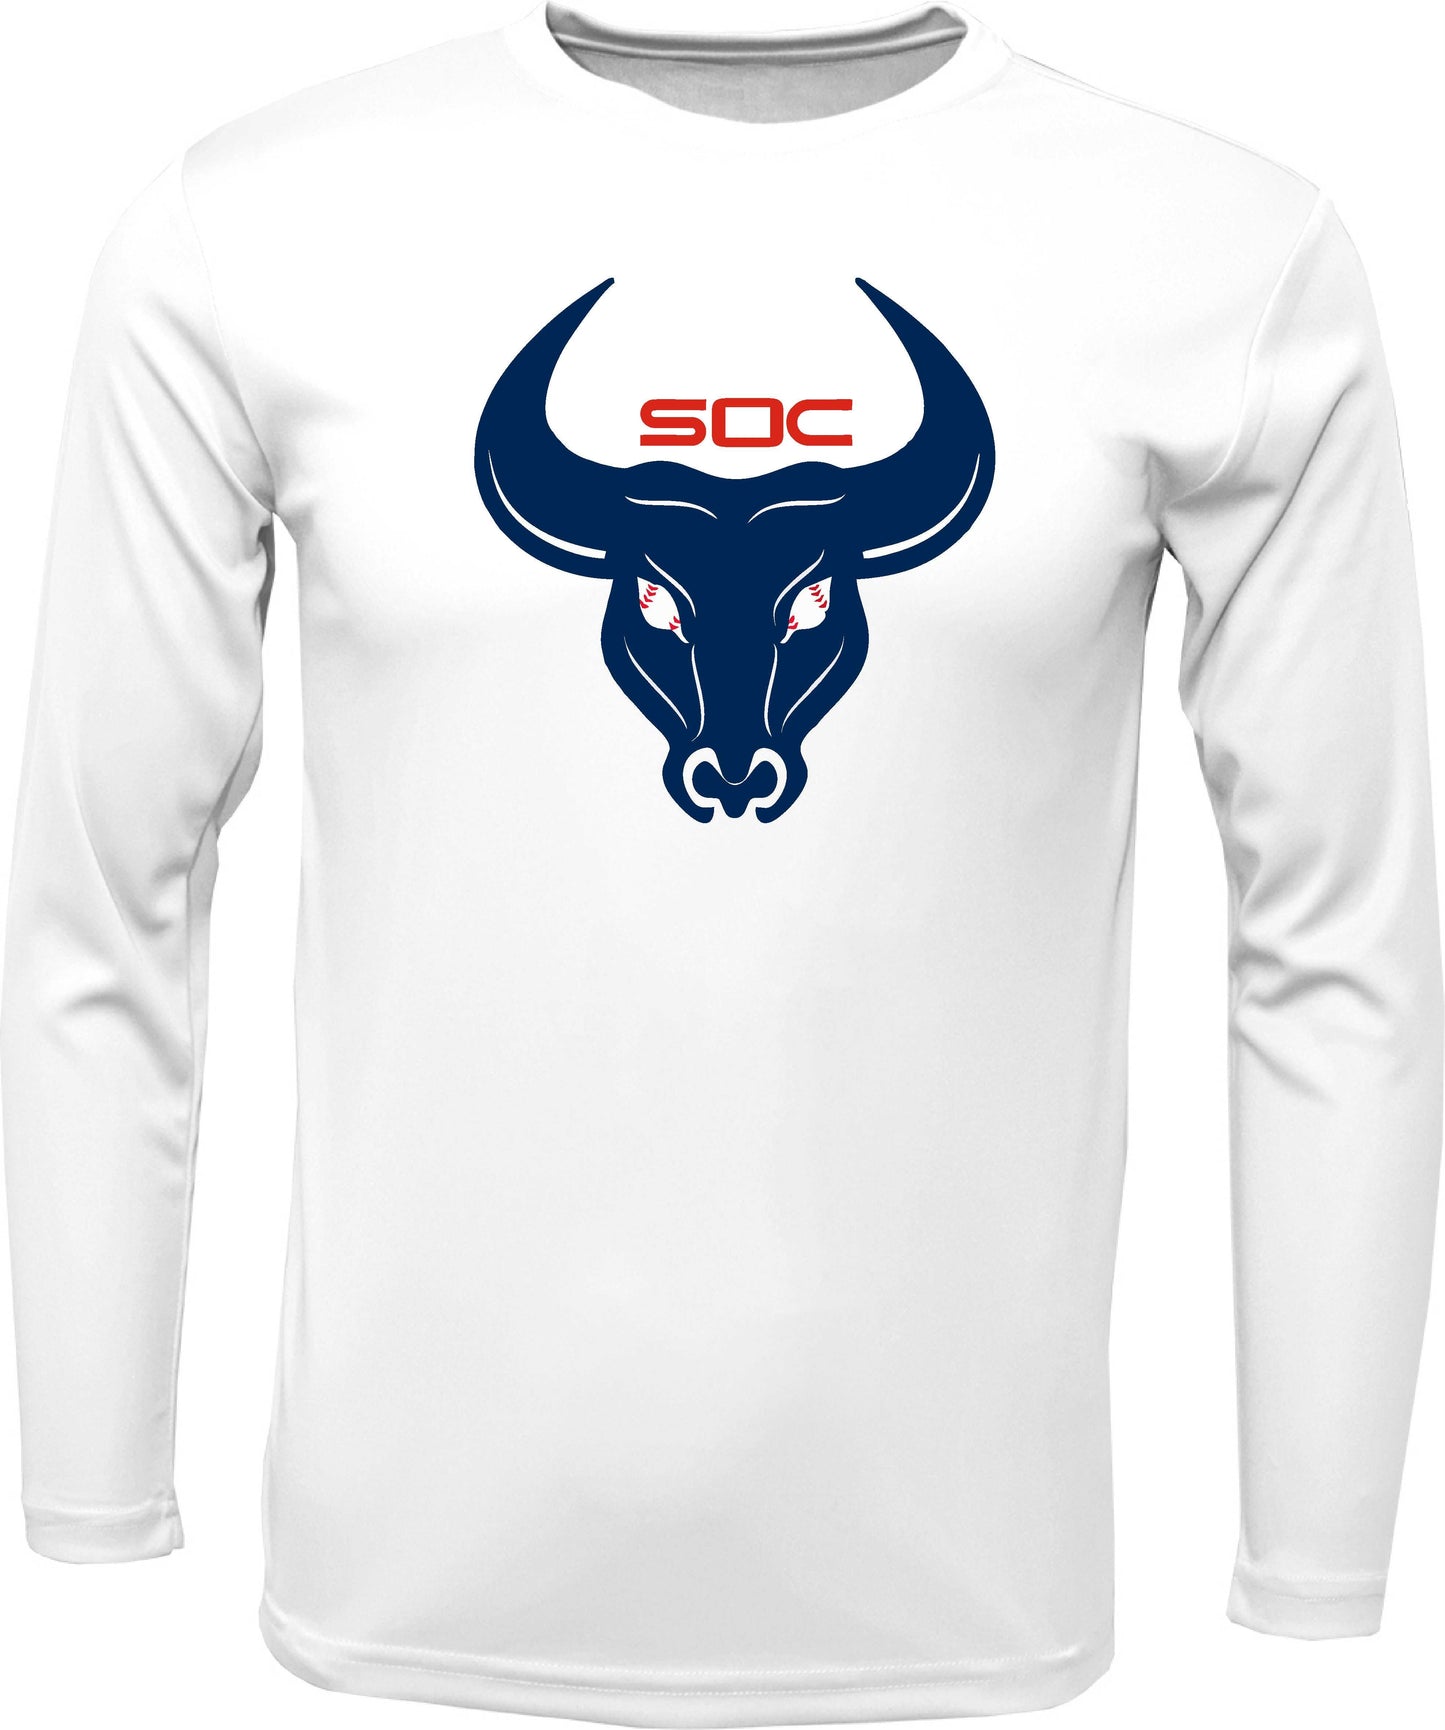 SC Long-sleeve "Bull Logo" Cotton T-shirt